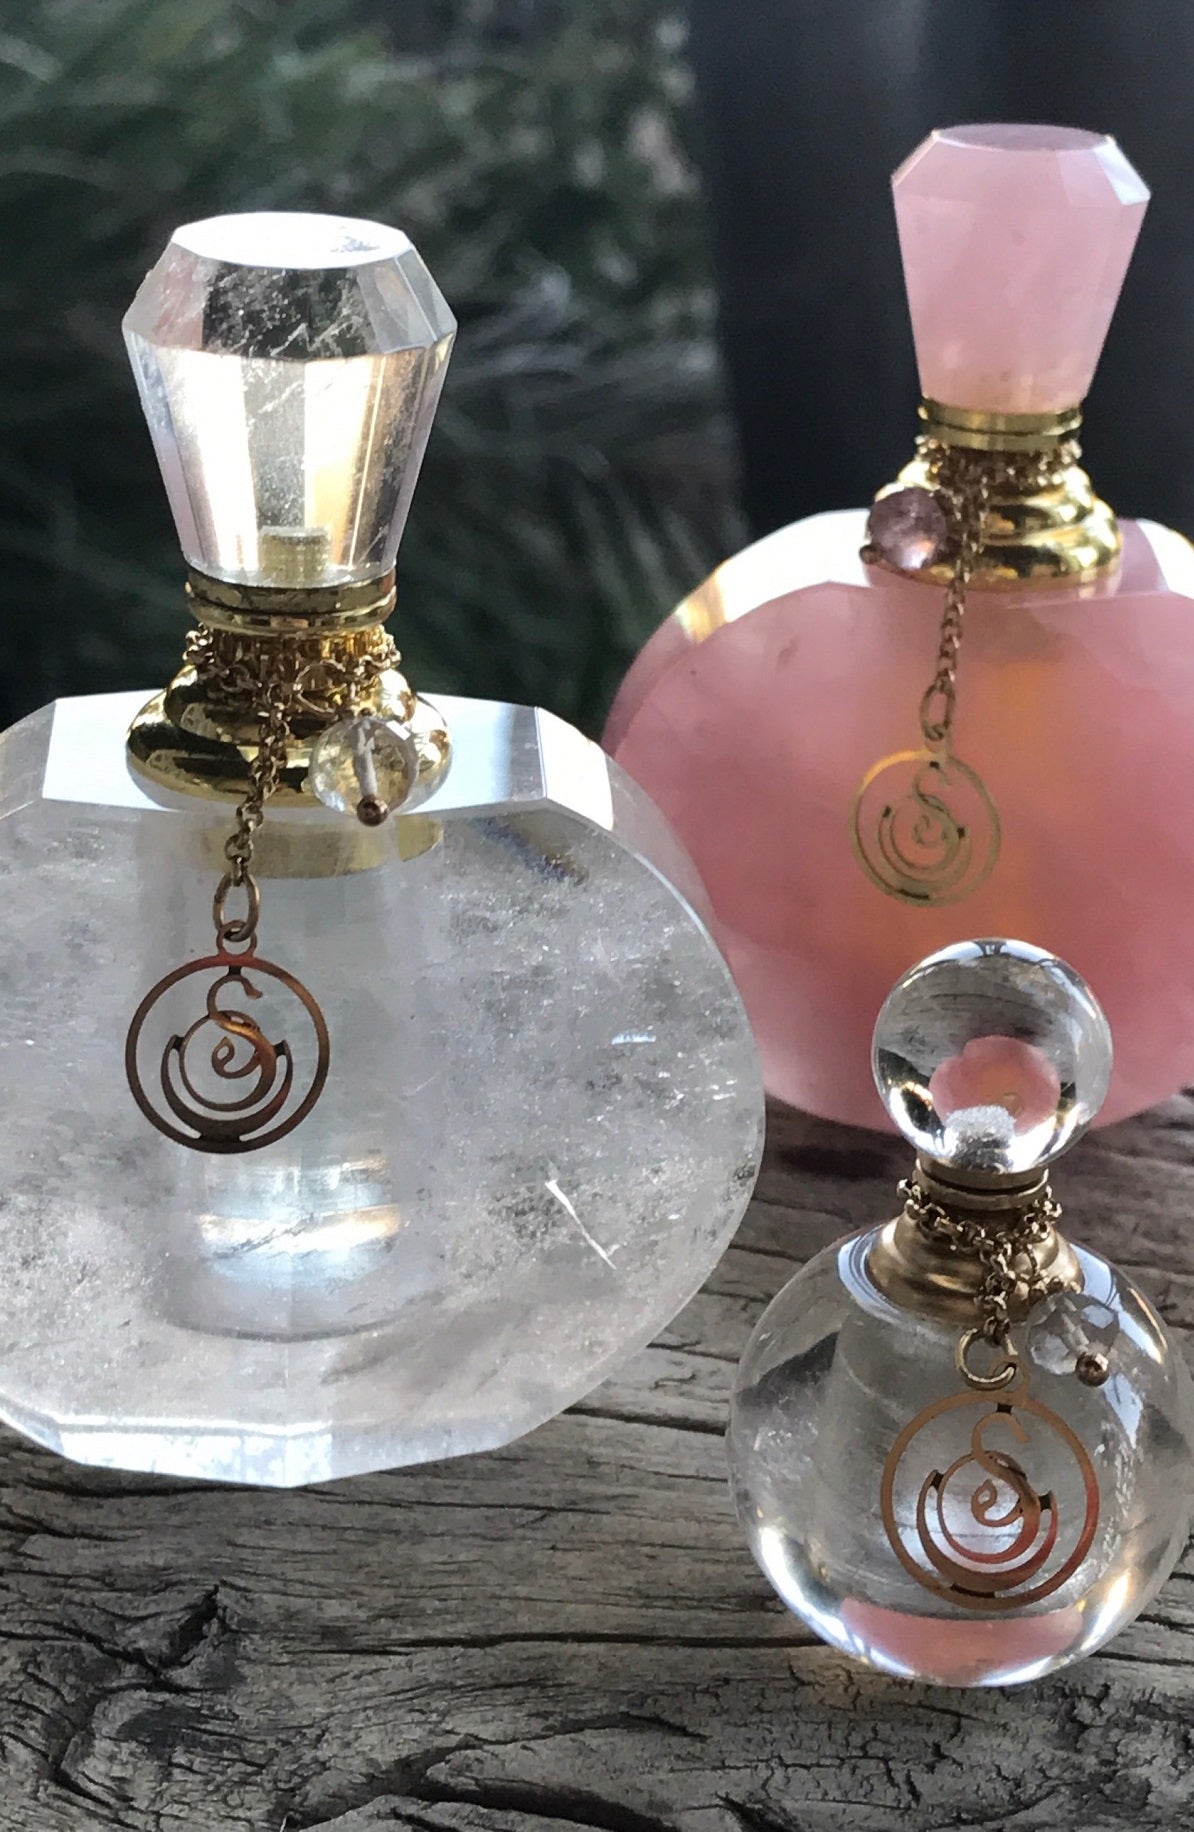 Medium Gemstone Perfume Bottle by Sage - Niche Perfume - Vegan Perfume - The Sage Lifestyle